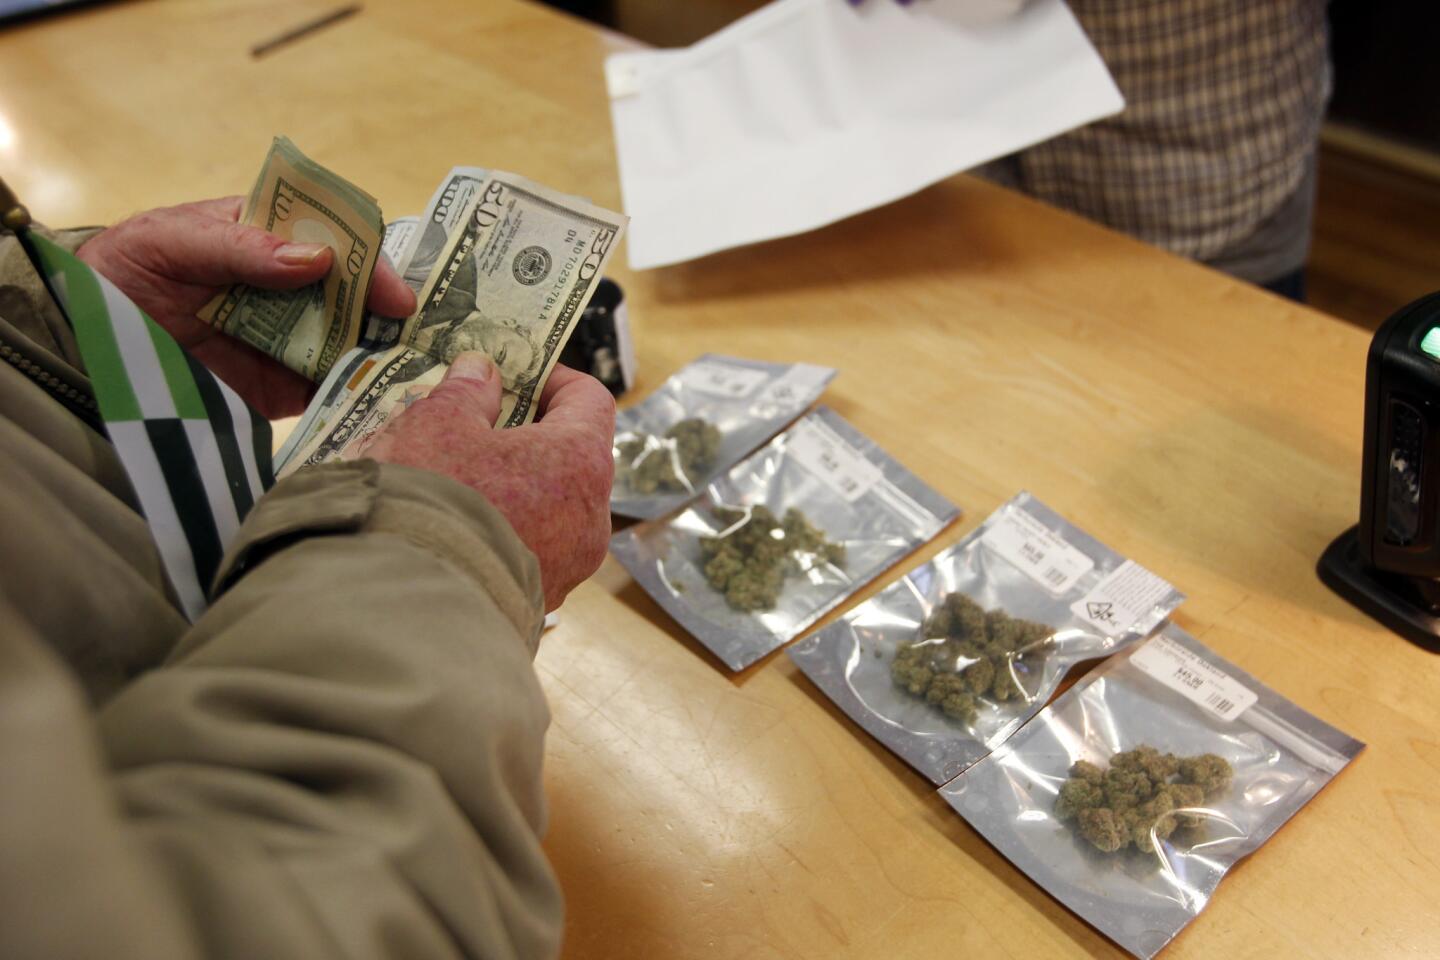 Legal marijuana sales in California